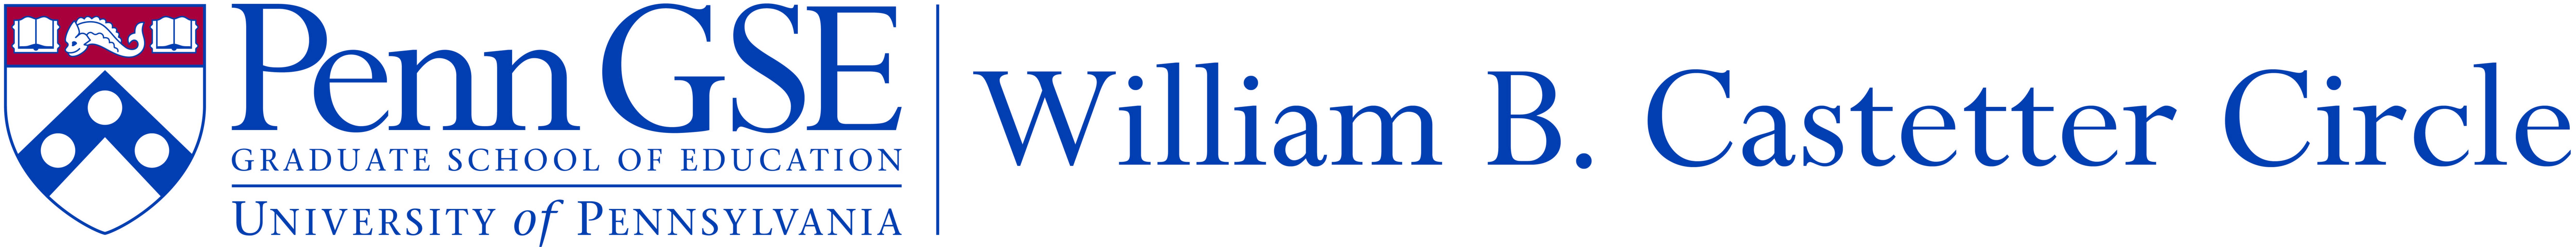 Penn GSE logo with “William B. Castetter Circle” written beneath it